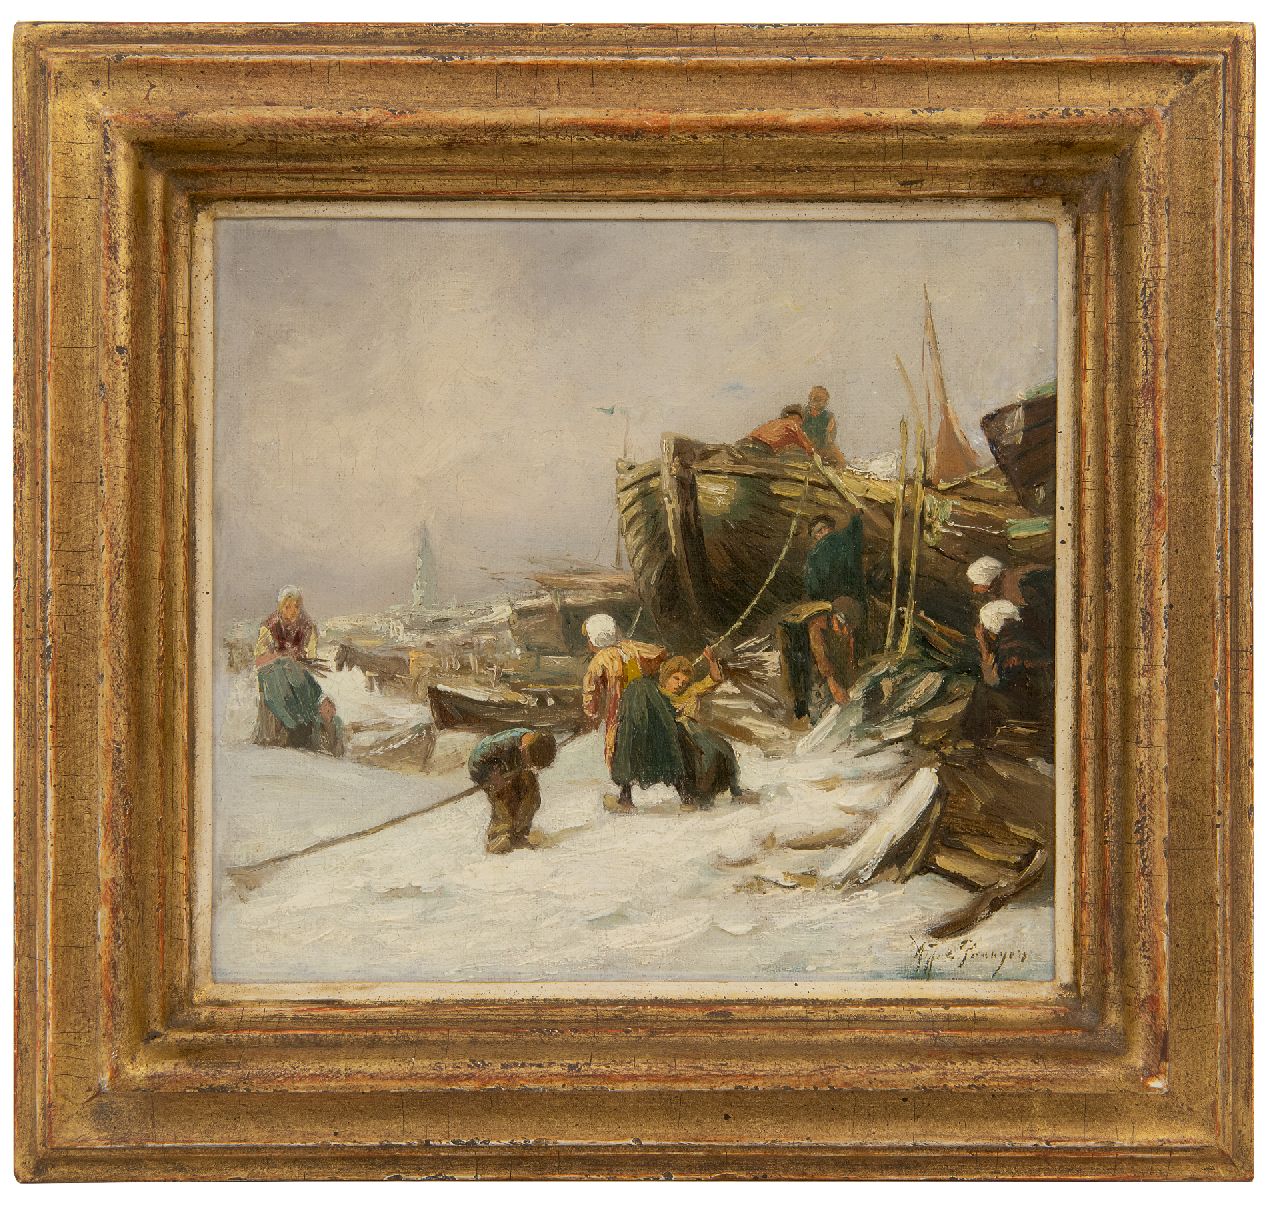 Prooijen A.J. van | Albert Jurardus van Prooijen | Paintings offered for sale | Beach in winter, oil on canvas laid down on panel 21.1 x 22.8 cm, signed l.r.